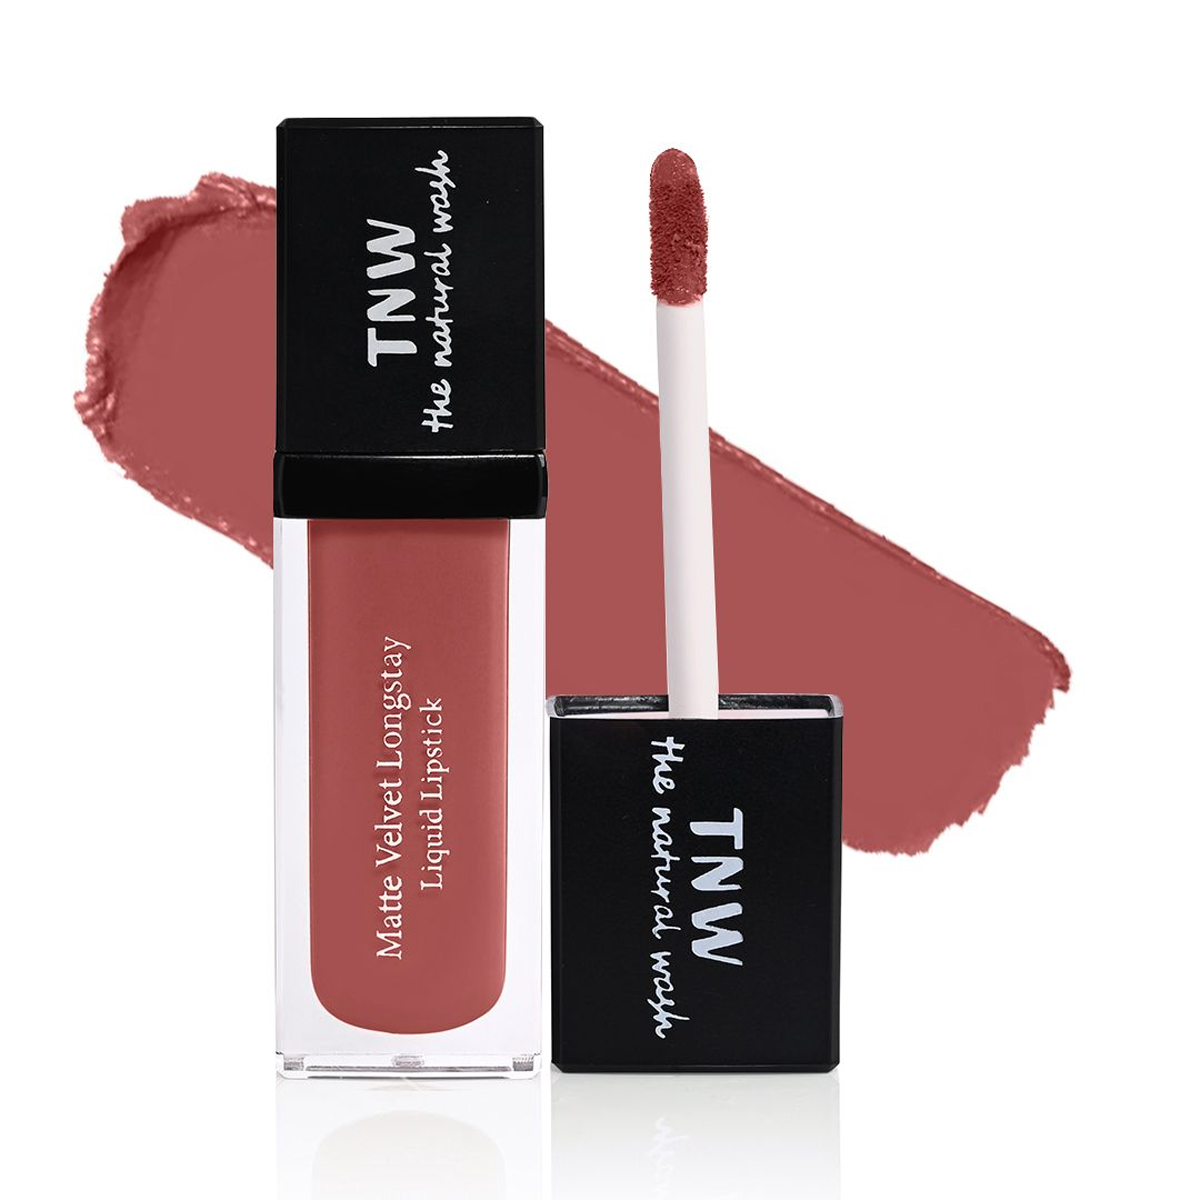 TNW - The Natural Wash Matte Velvet Longstay Liquid Lipstick, 01 - Blush Nude - Nude Pink, 5ml